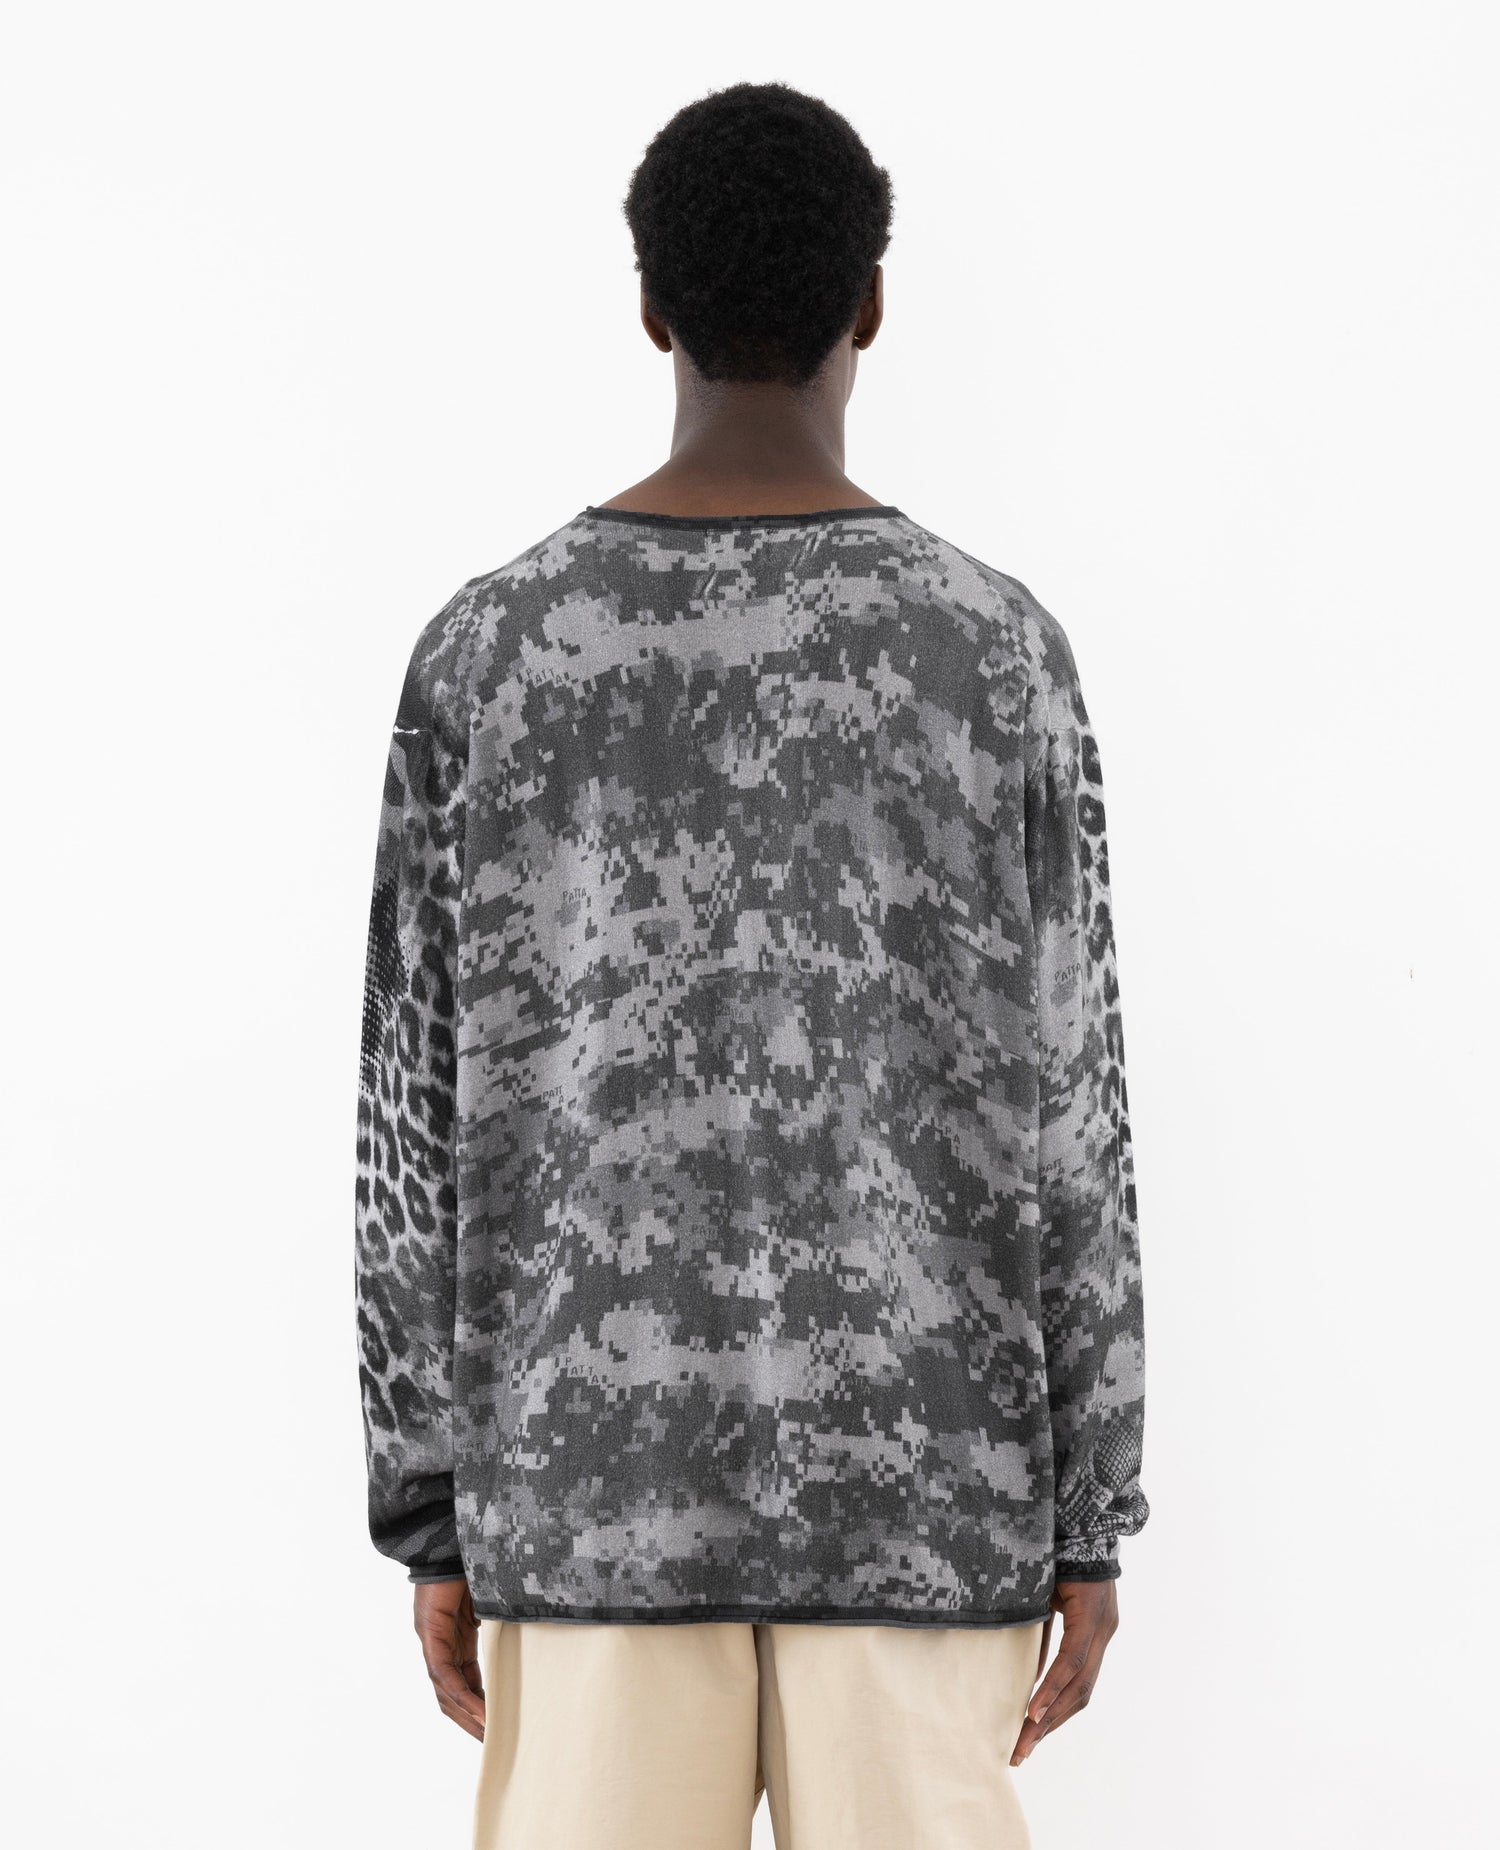 Patta Jungle Knitted Longsleeve T-Shirt (Multi/Grayscale)